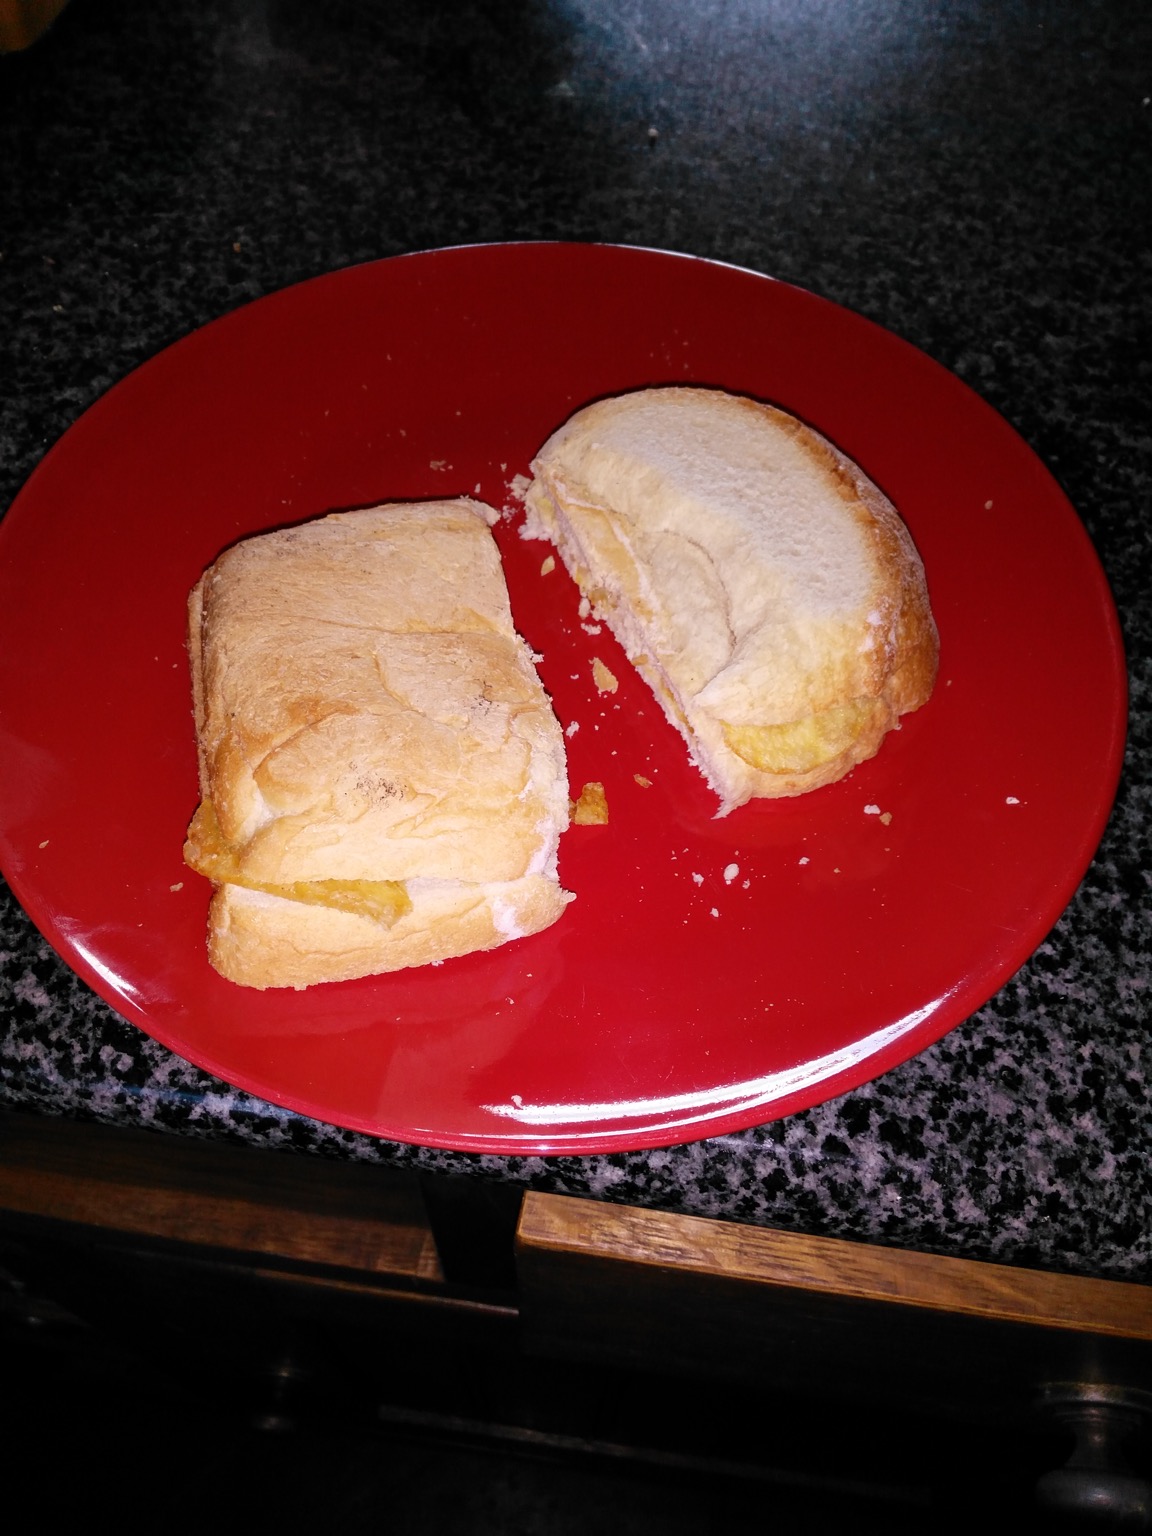 Flash photo of halved white crisp sandwich